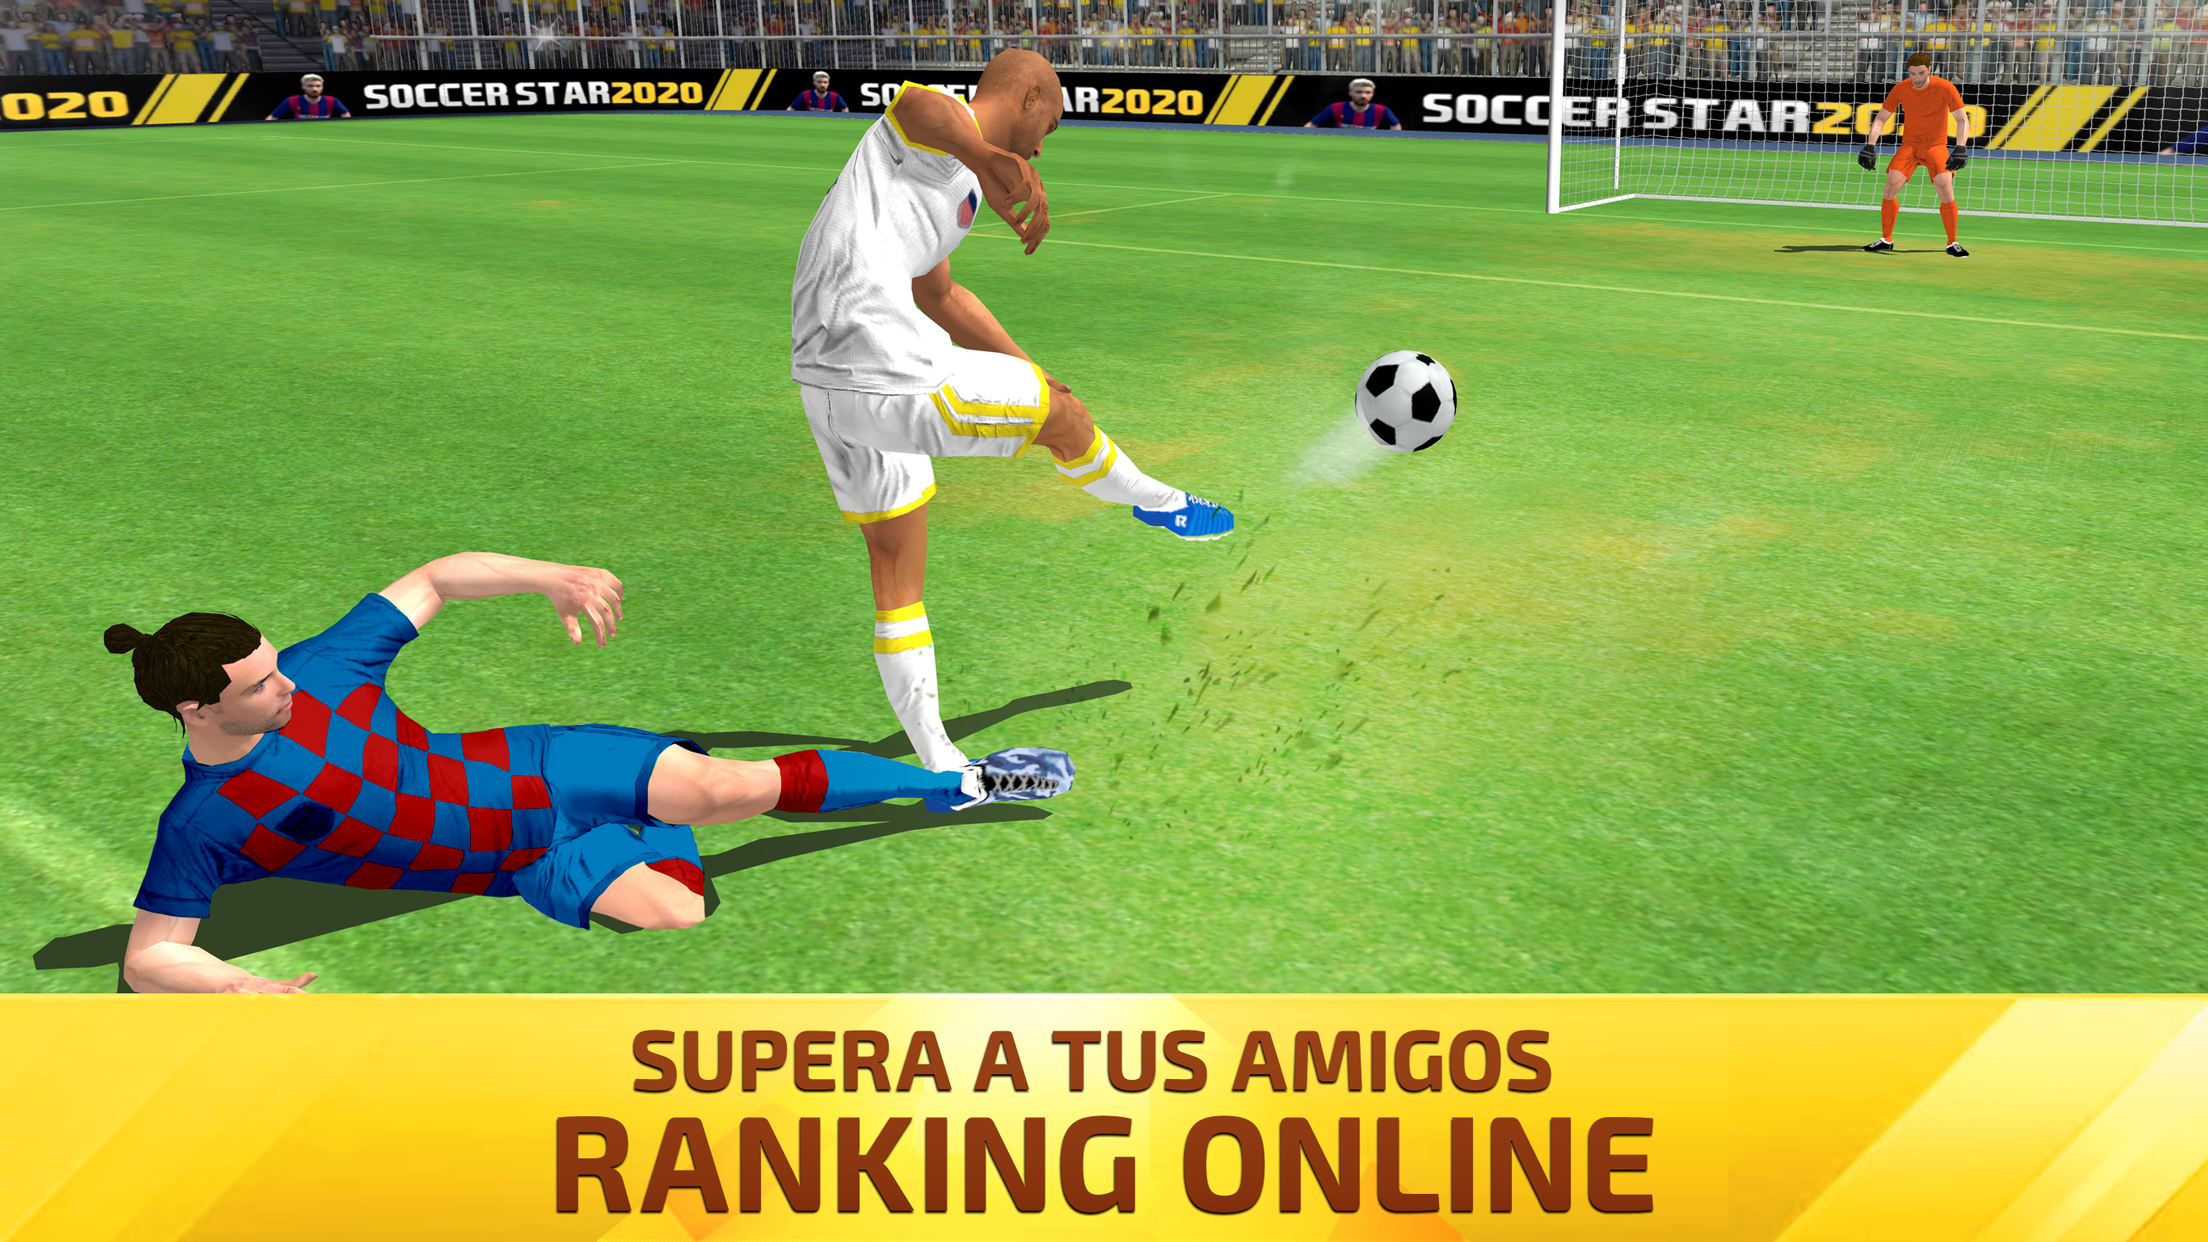 Soccer Star 22 Top Leagues APK (Android Game) - Baixar Grátis